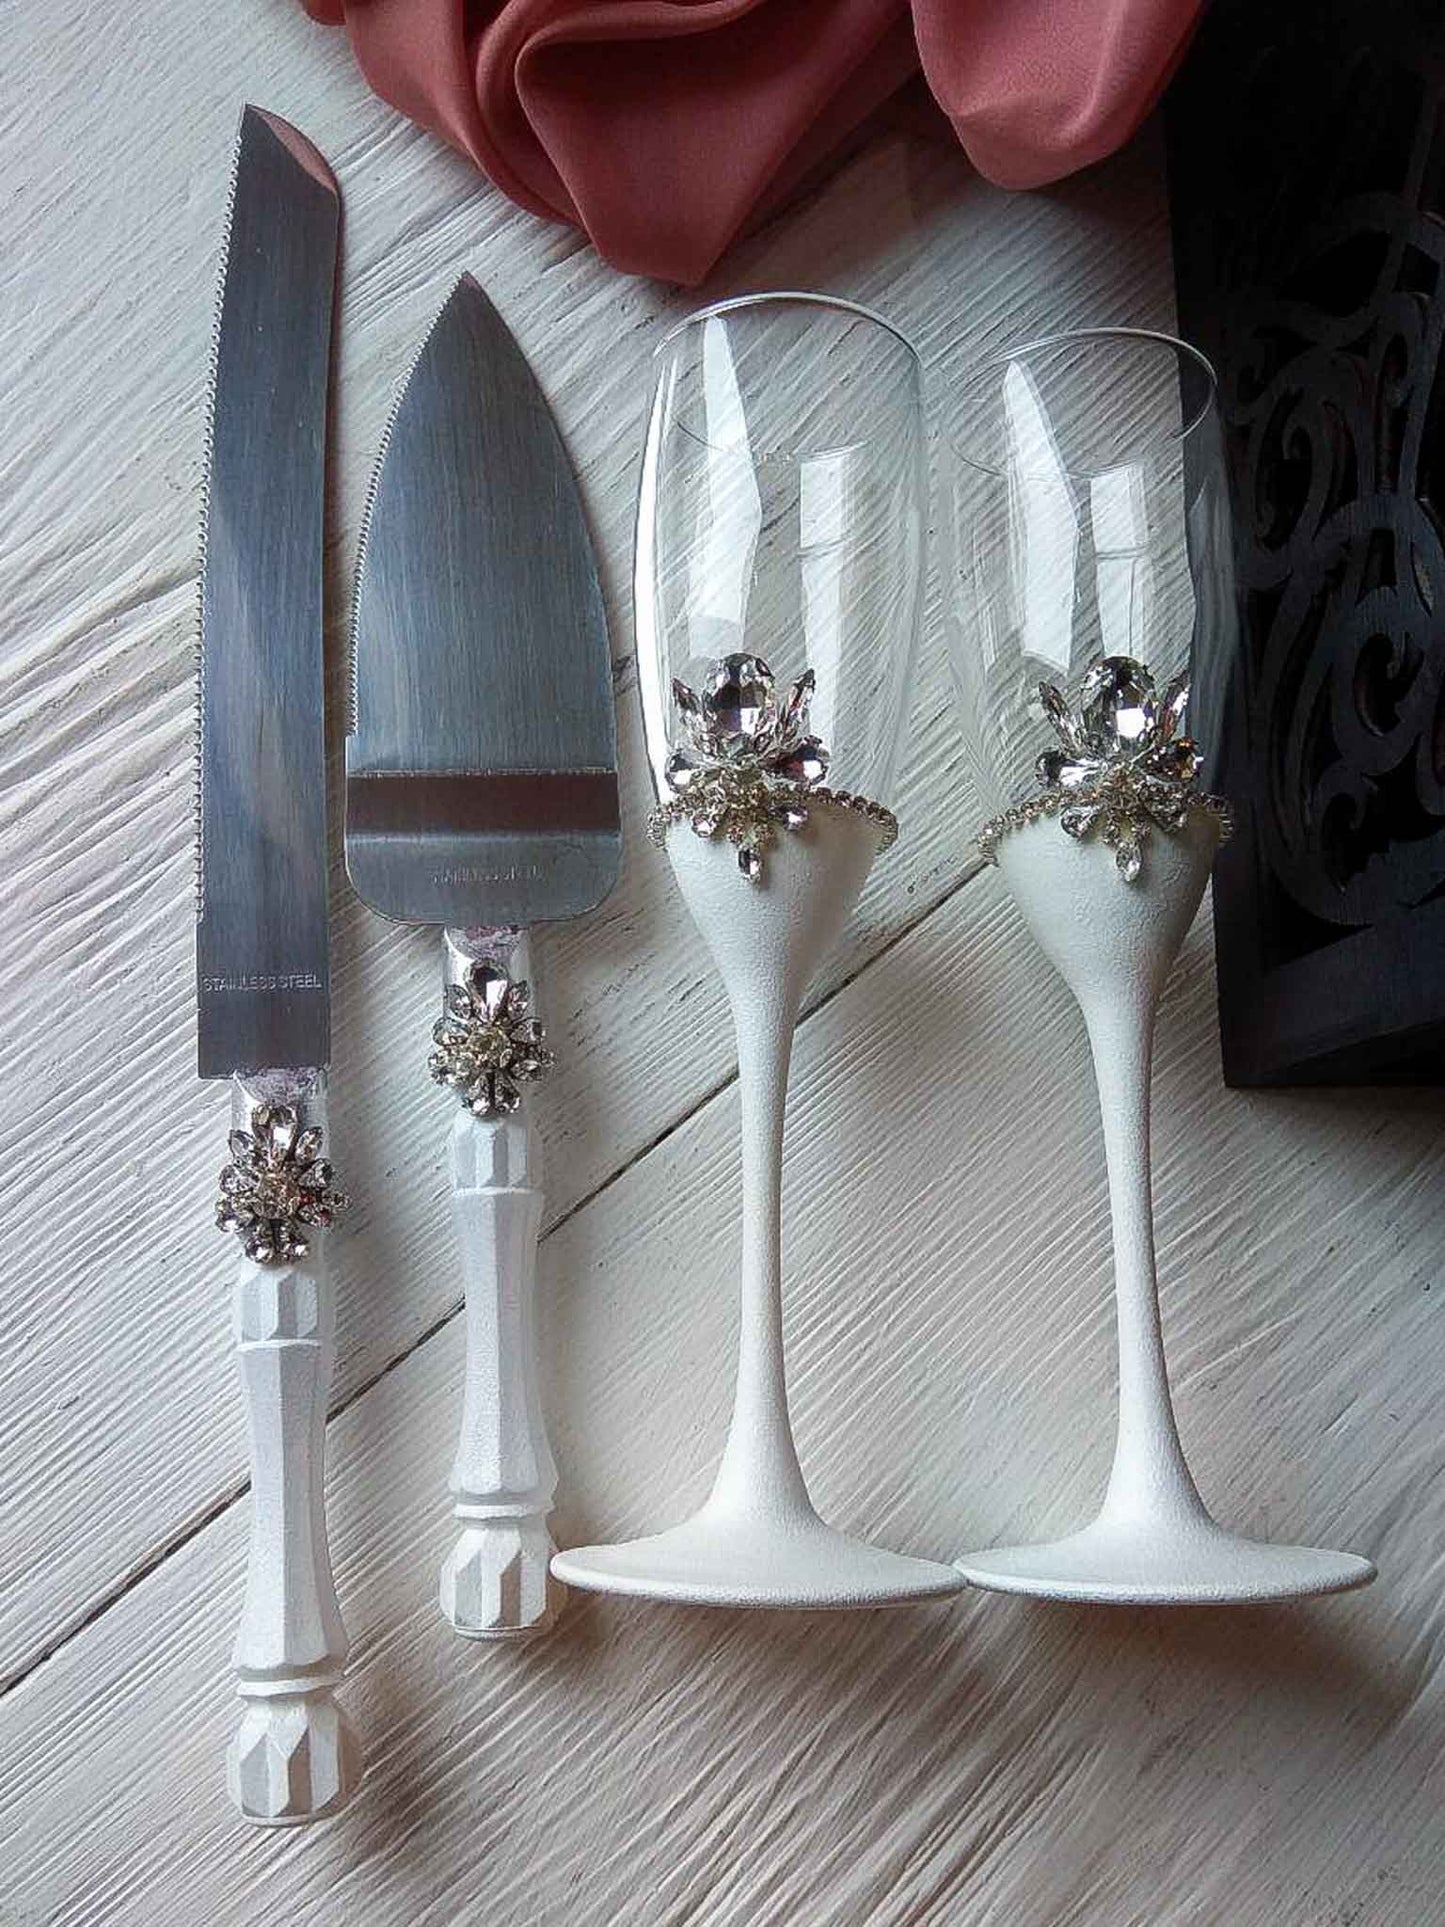 Engraved silver wedding glasses